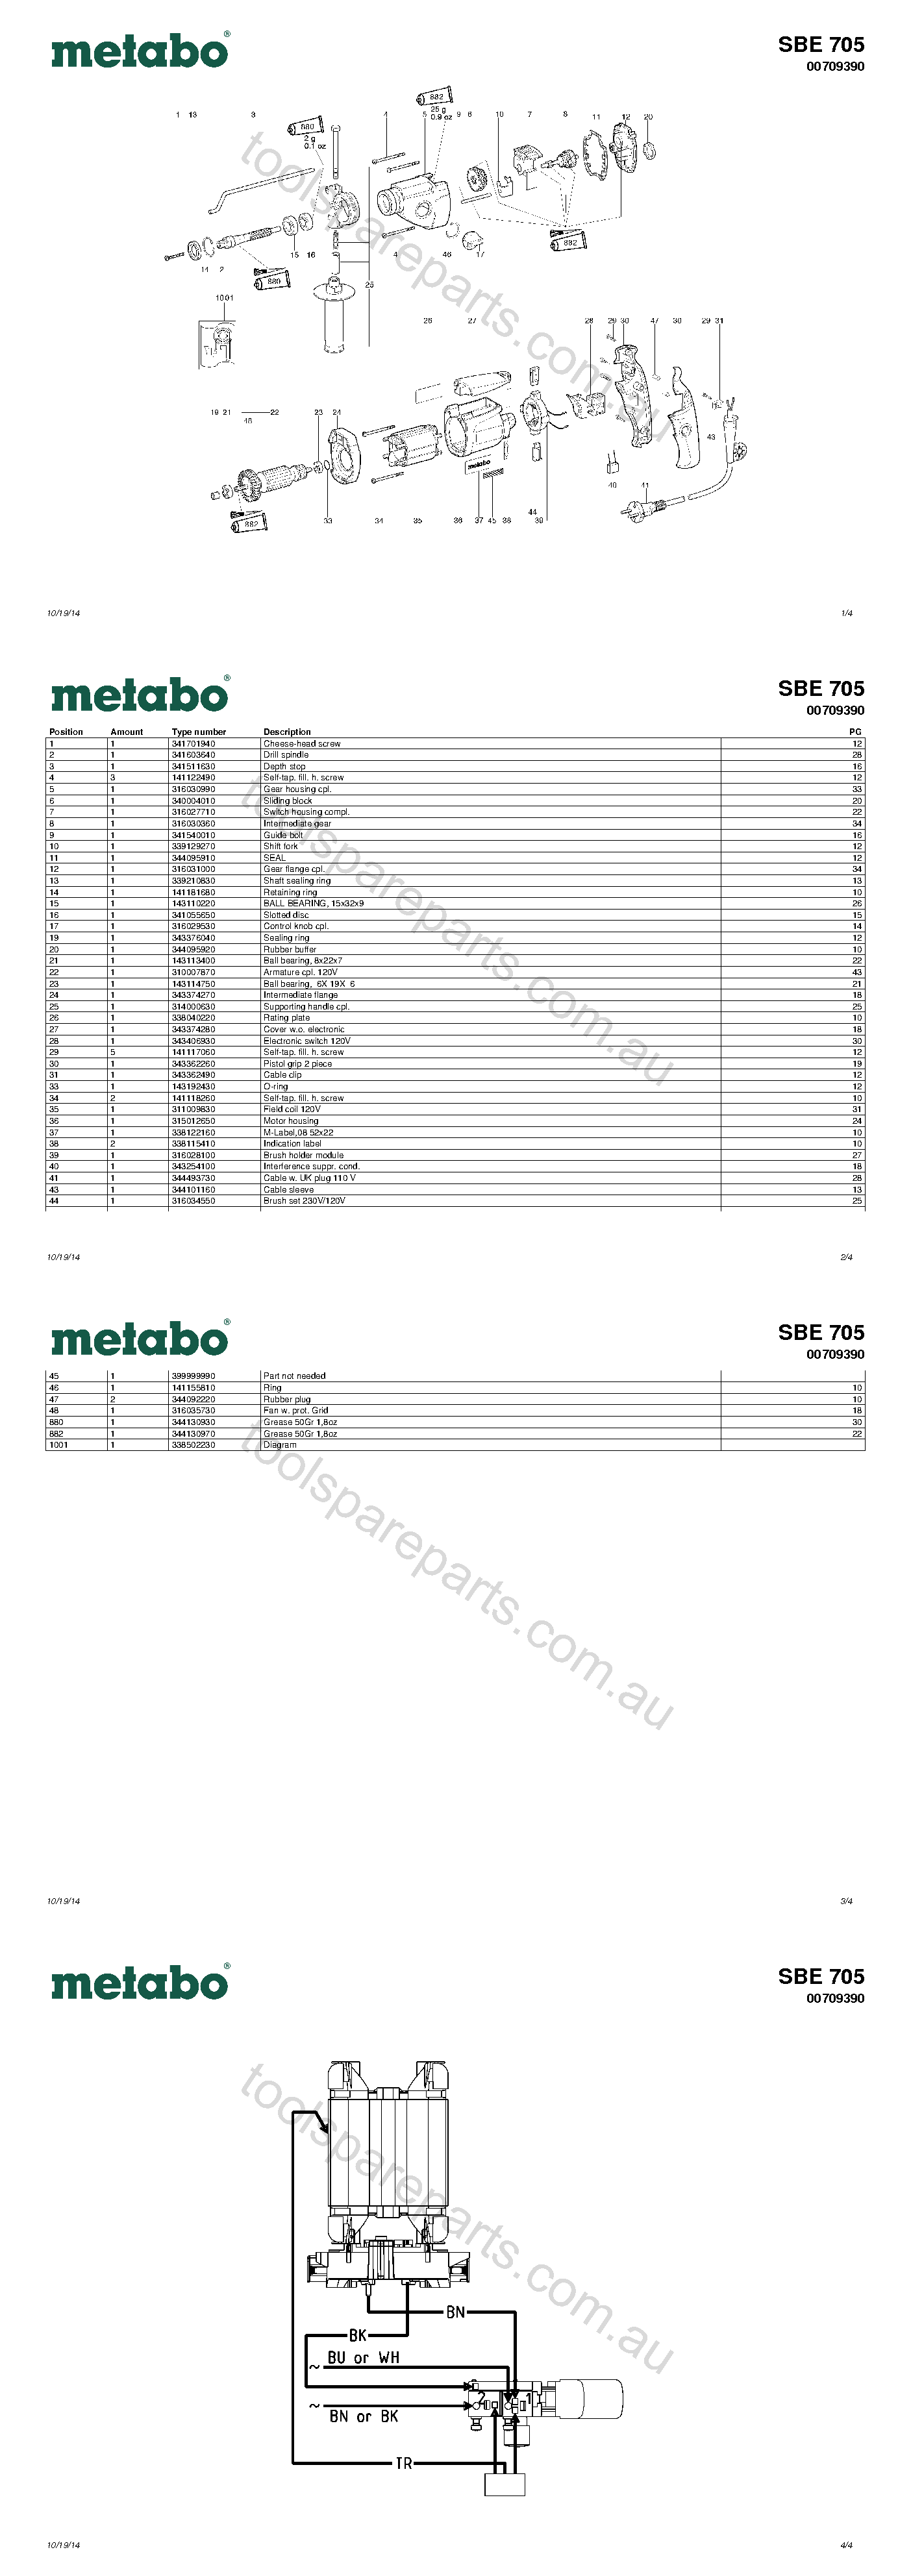 Metabo SBE 705 00709390  Diagram 1